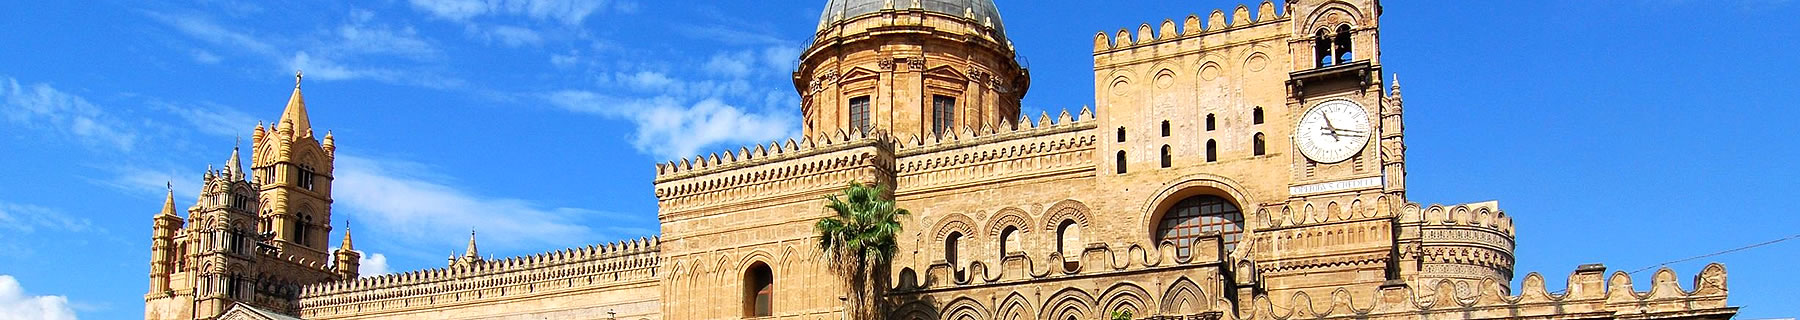 Destinations - Palermo